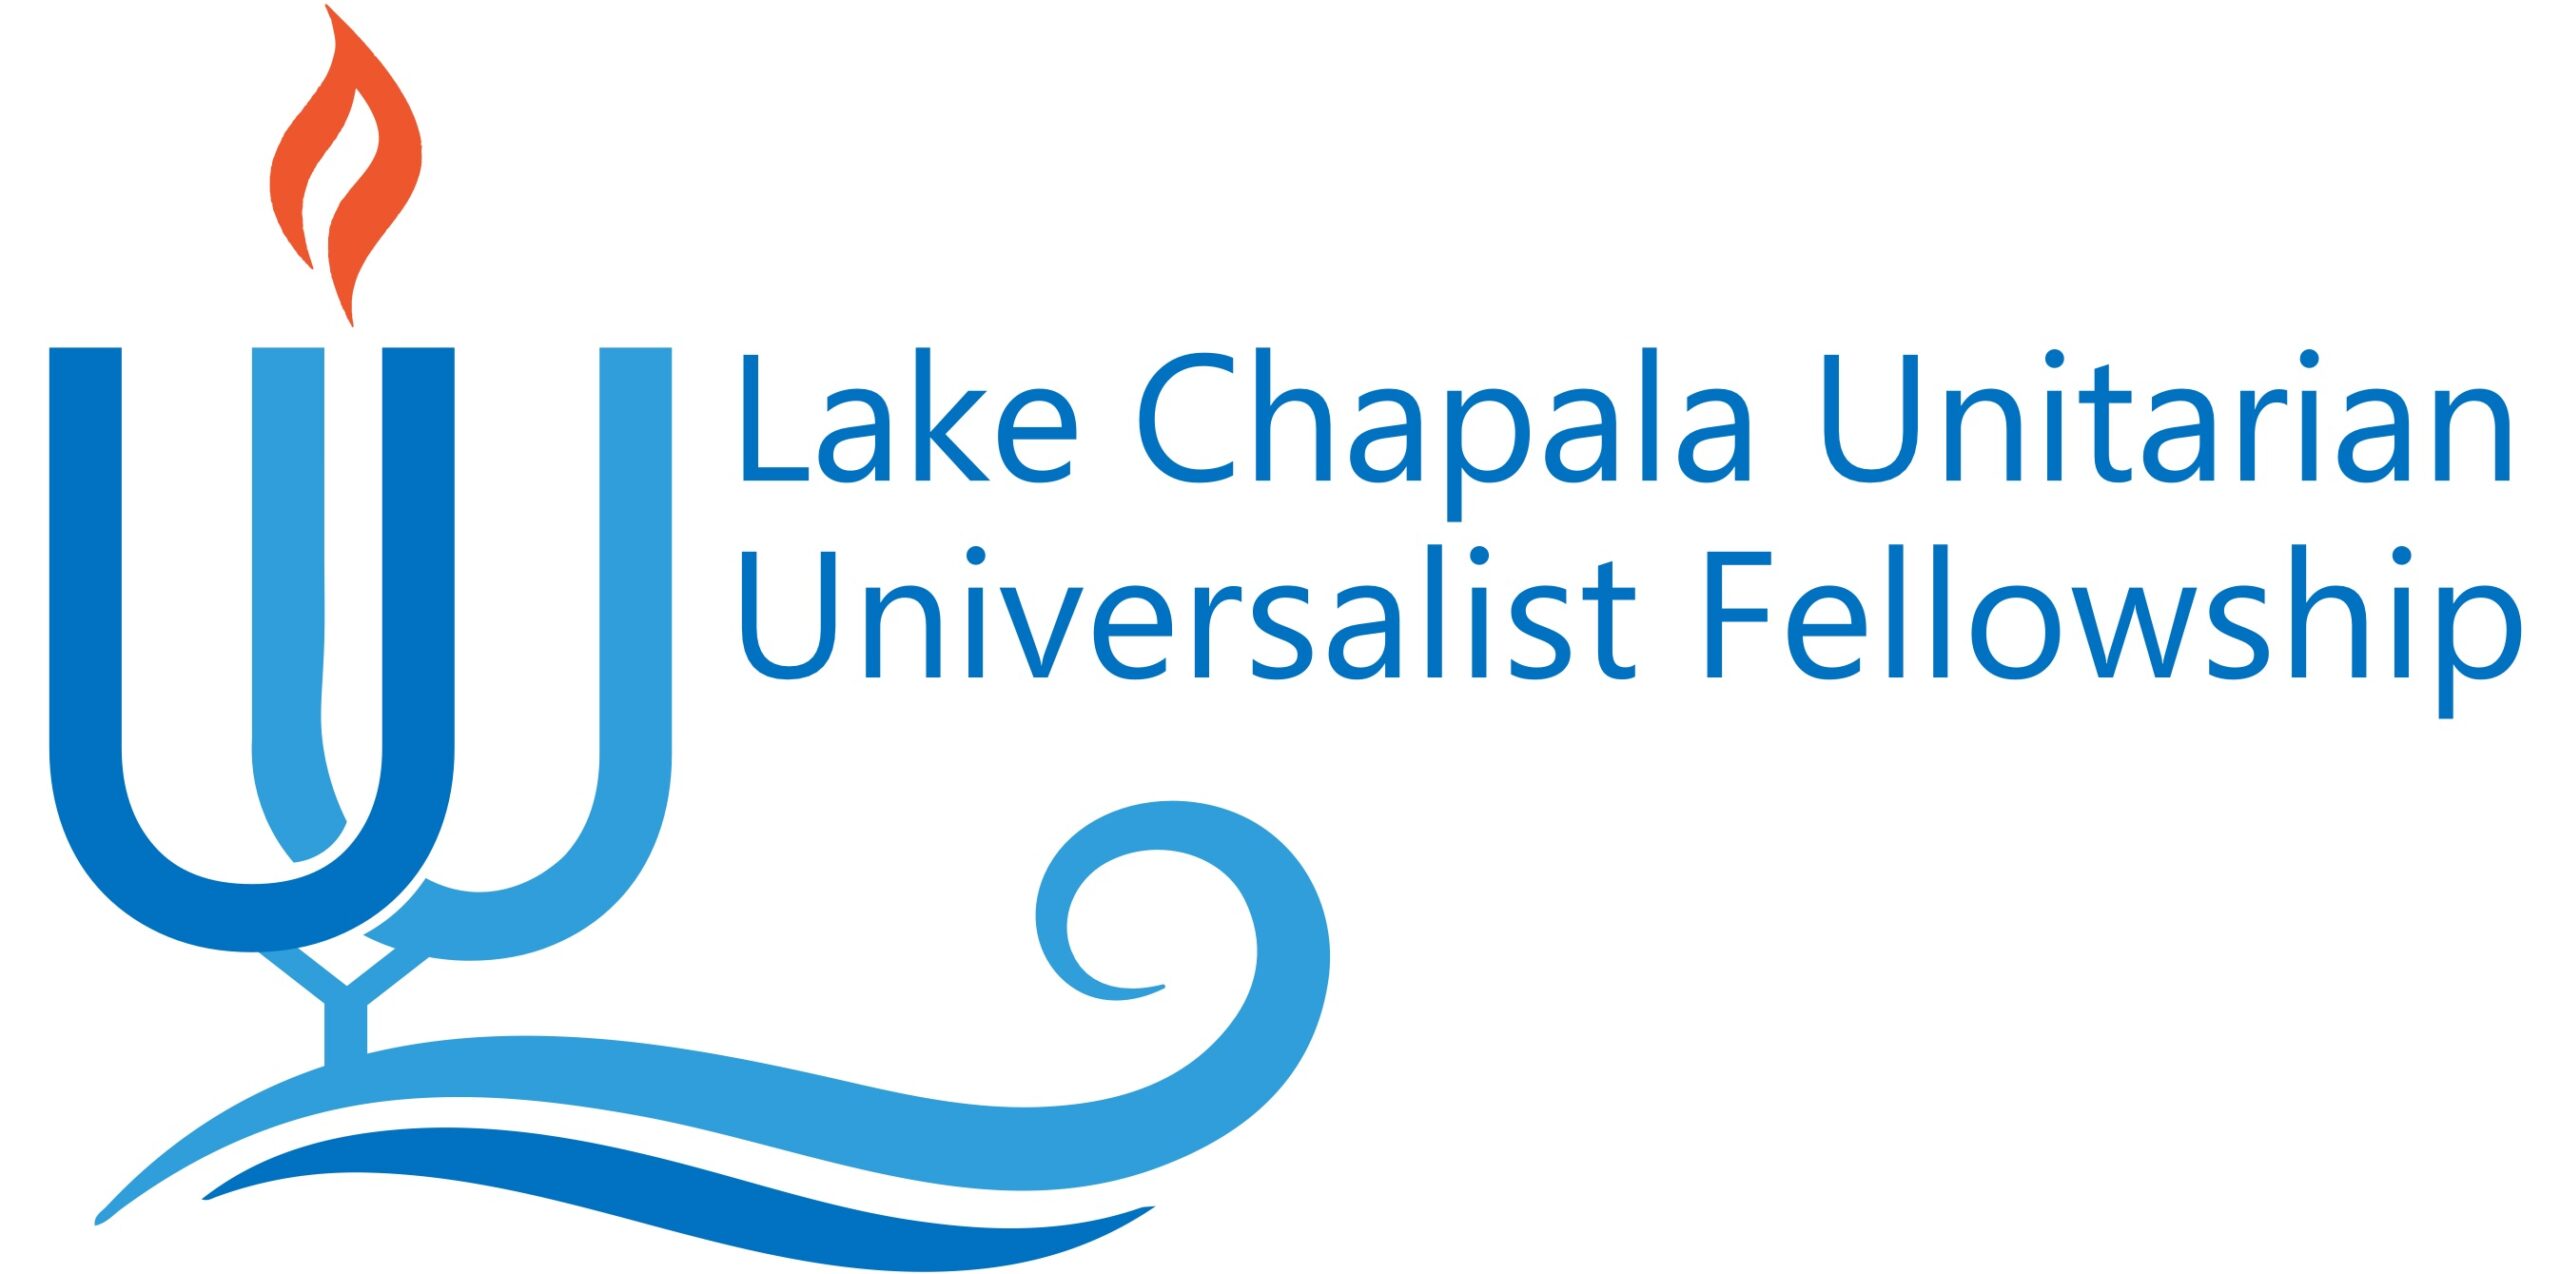 Lake Chapala Unitarian Universalist Fellowship